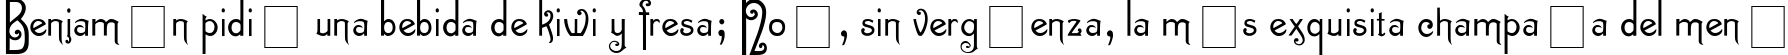 Пример написания шрифтом Sevilla Decor текста на испанском